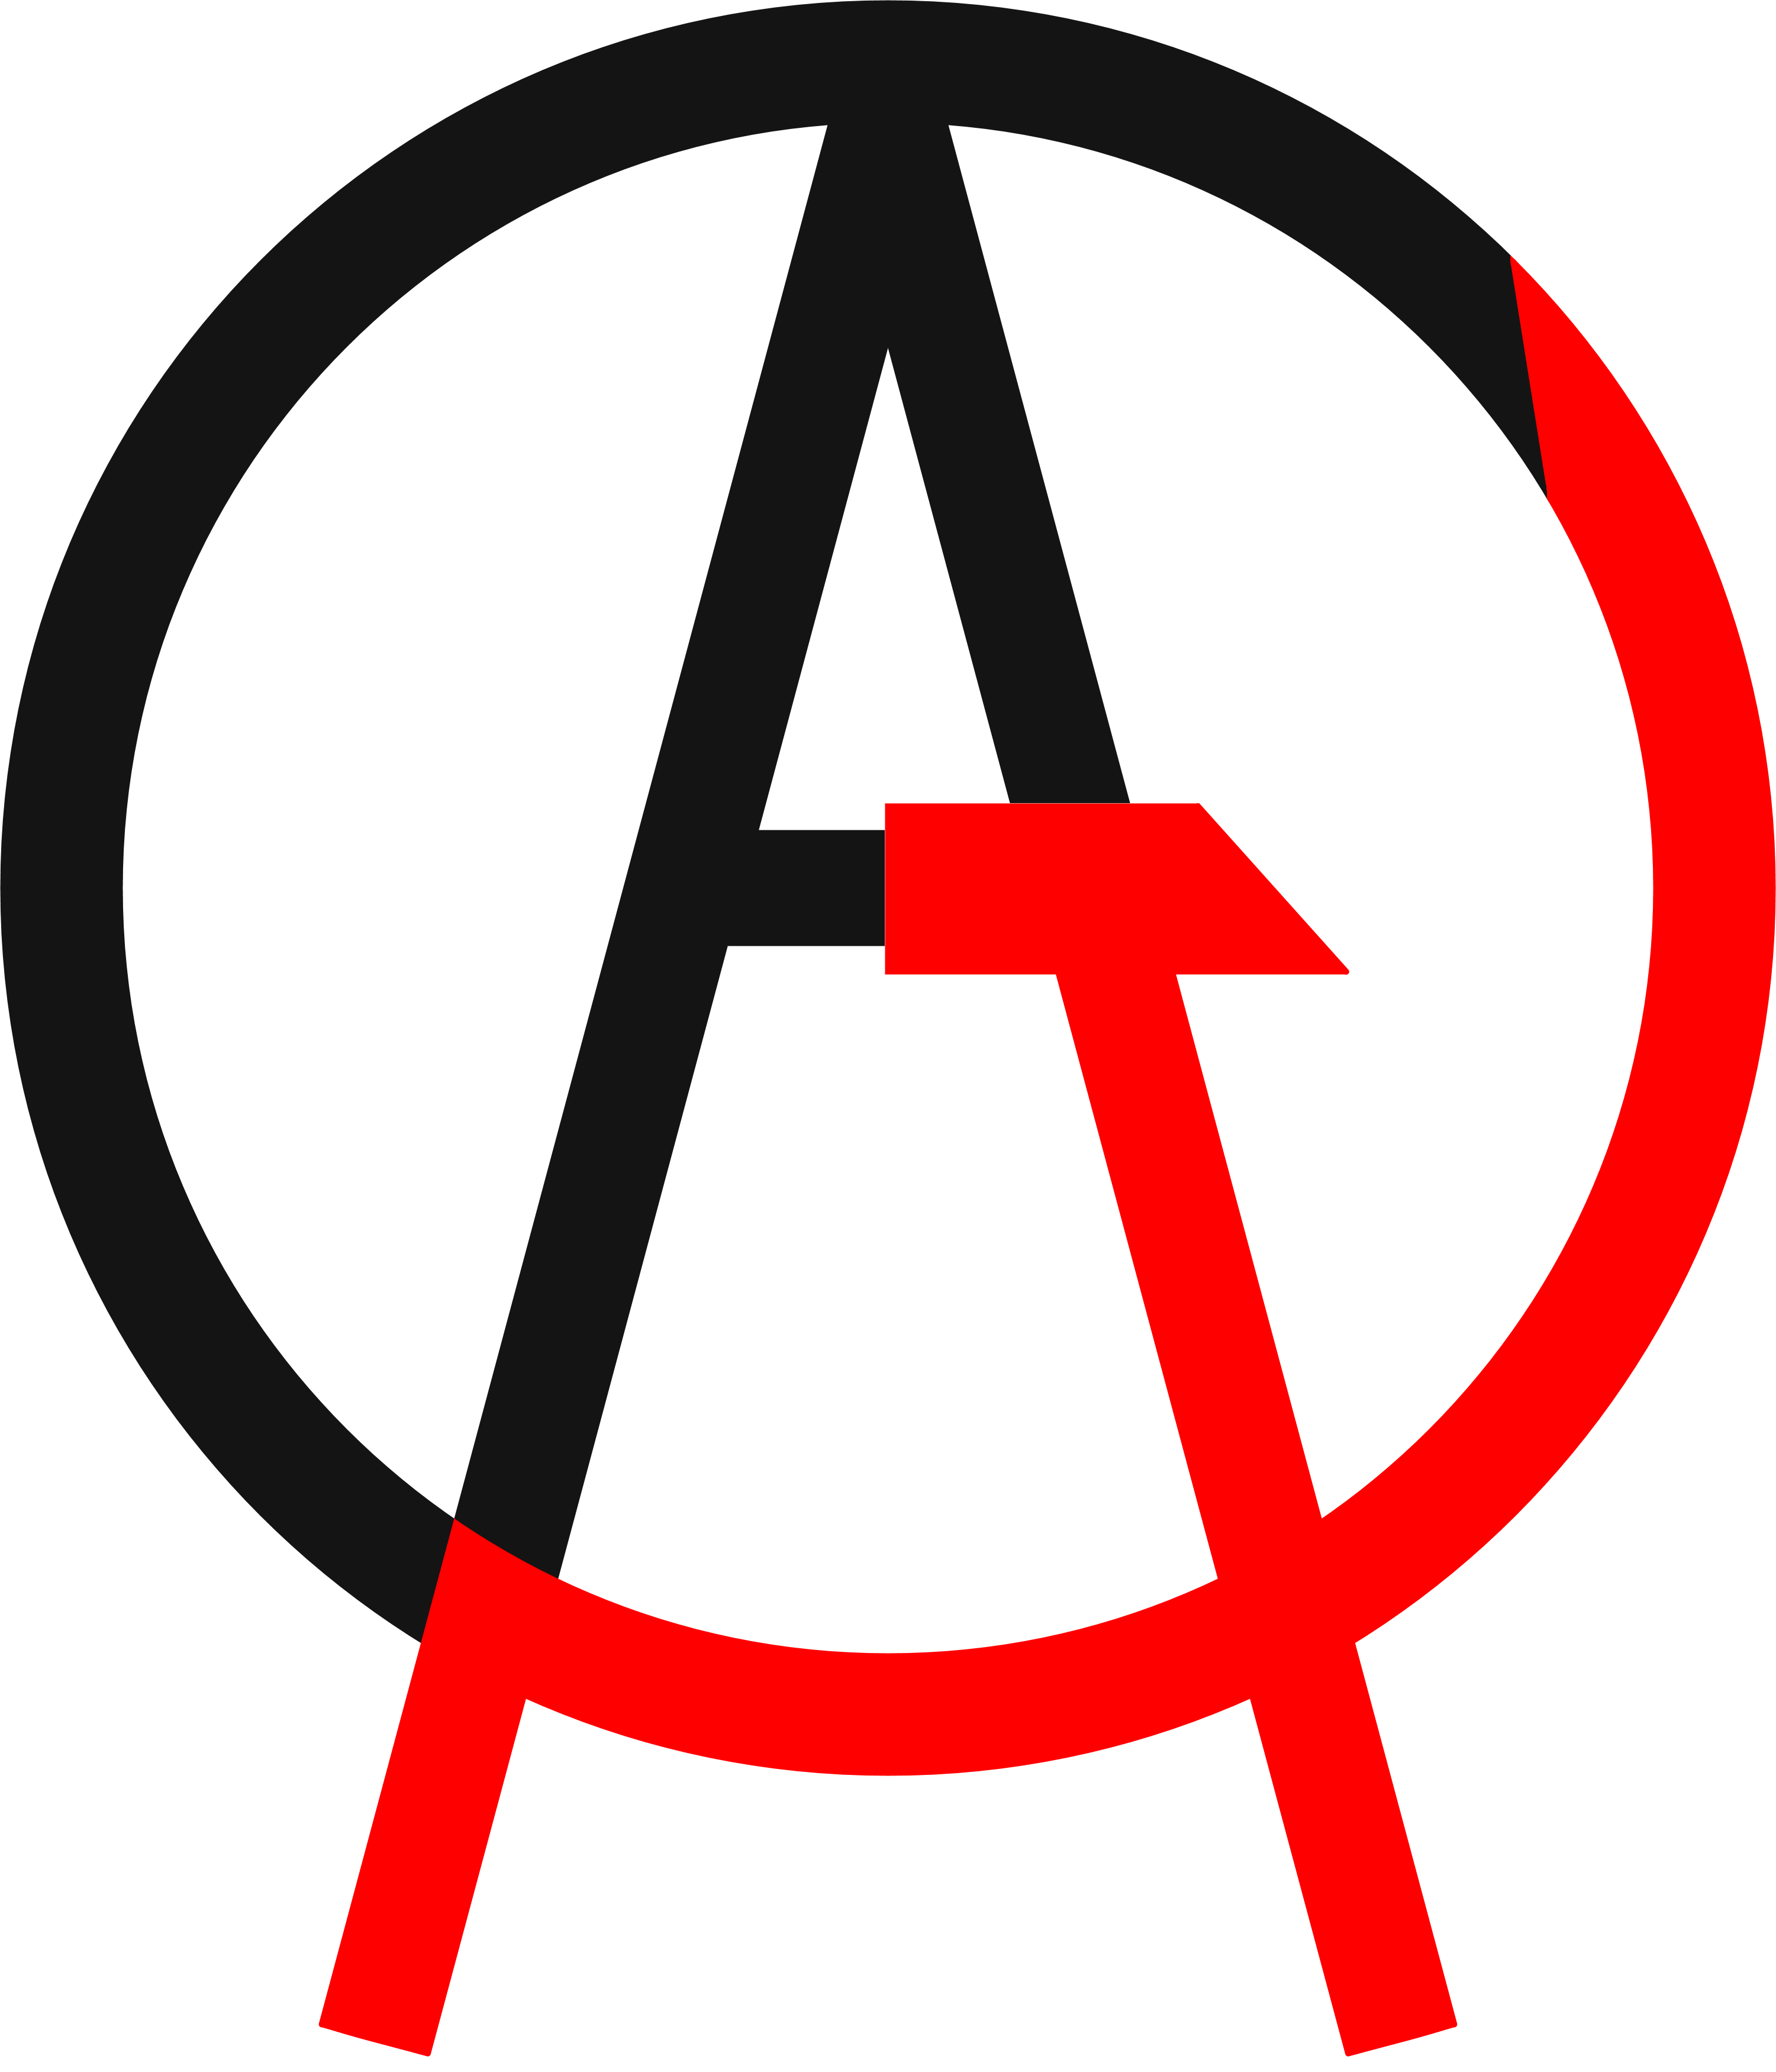 Comunist Logo - Anarcho-Communism logo I came up with : logodesign